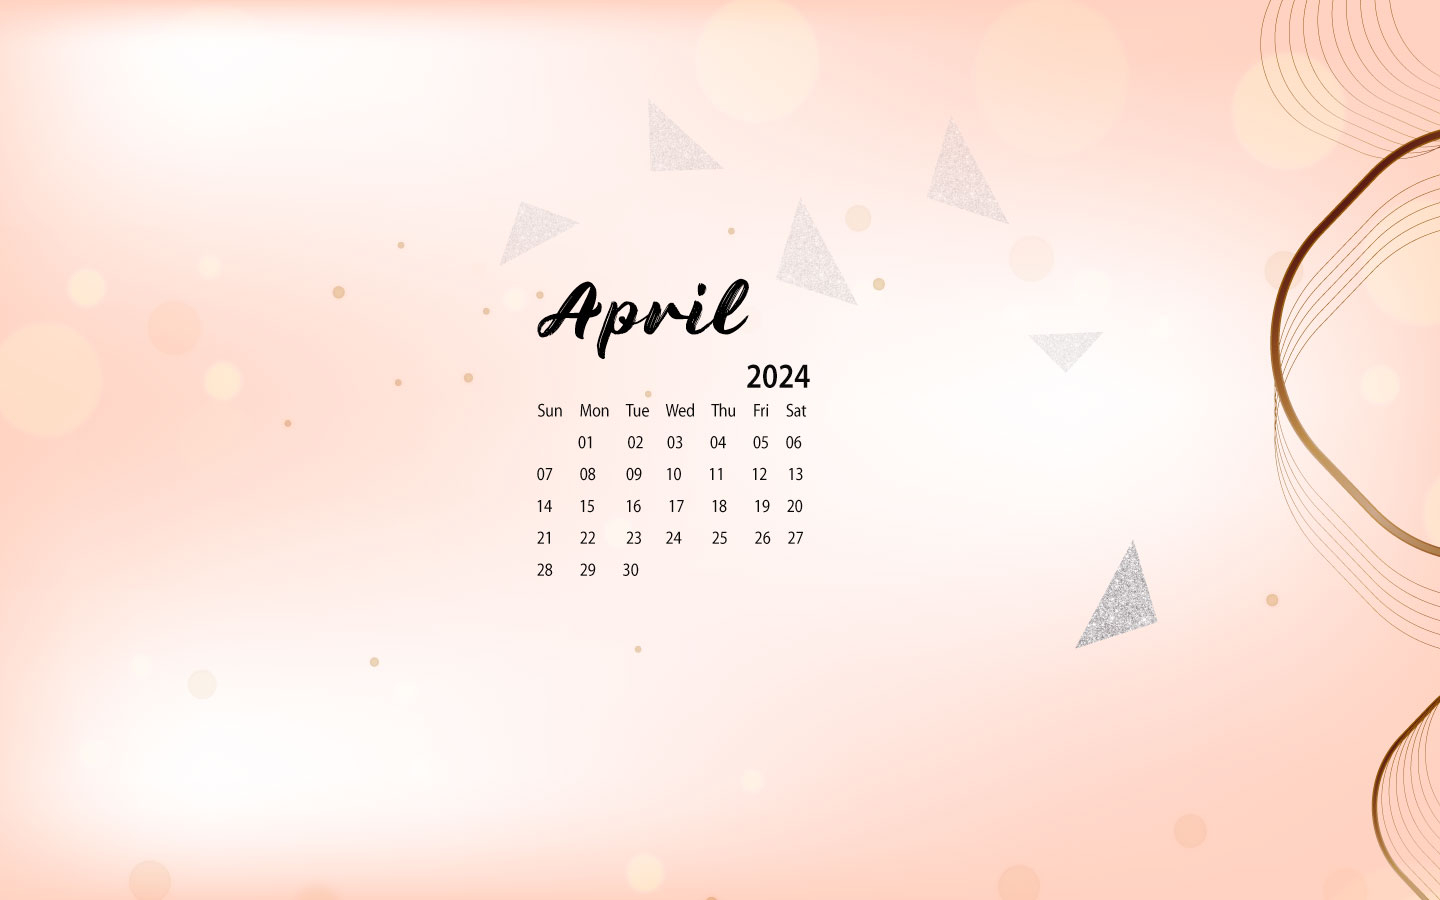 April 2024 Desktop Wallpaper Calendar - Calendarlabs for April Calendar 2024 Wallpaper